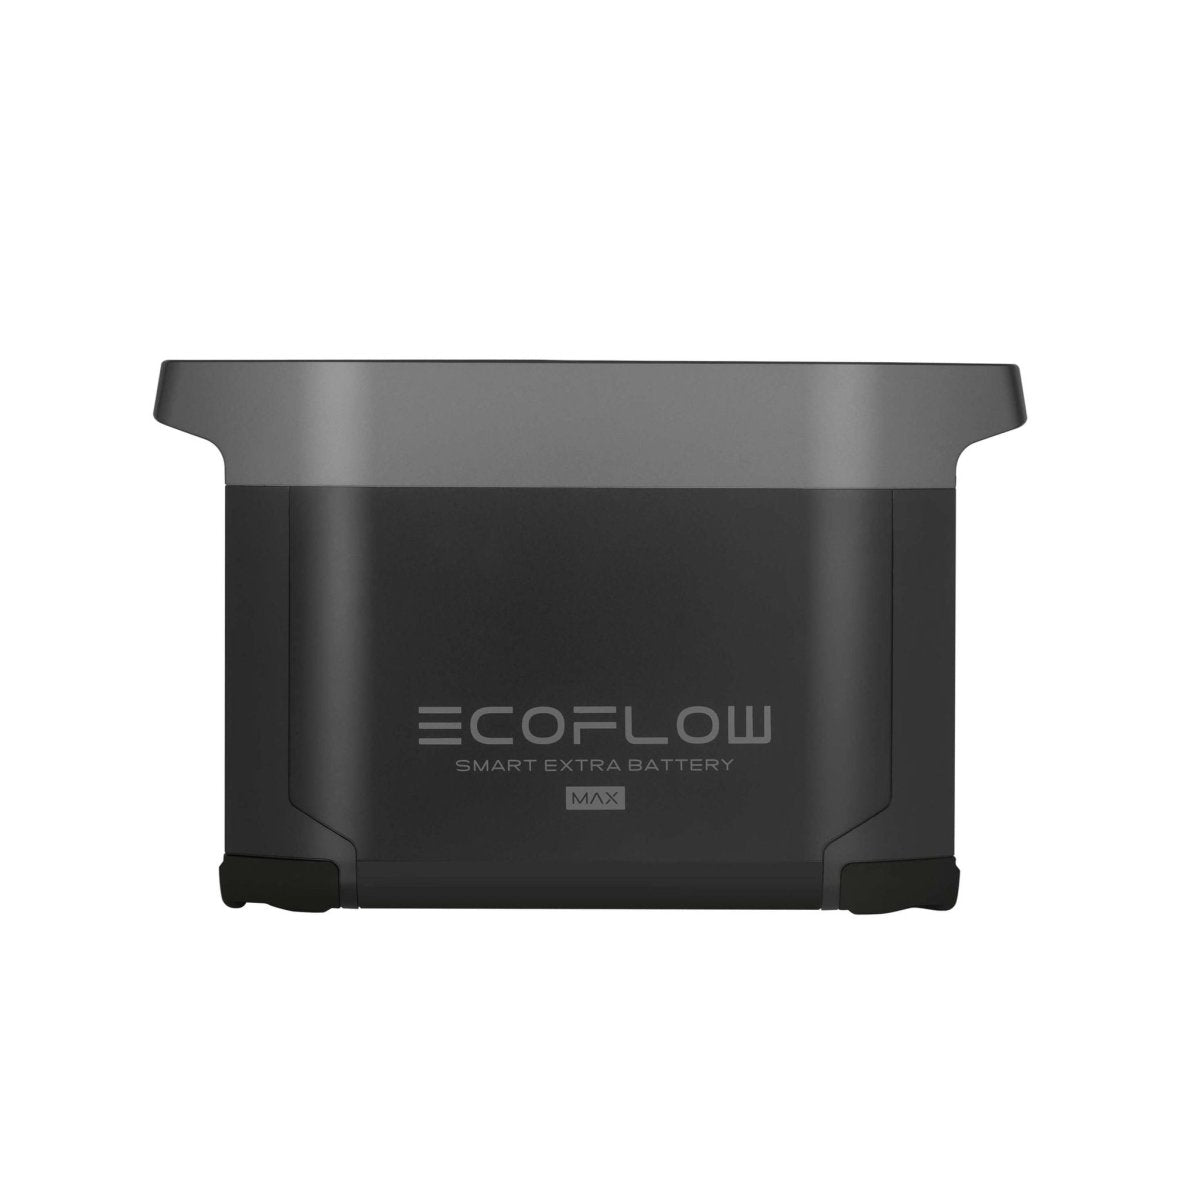 EcoFlow DELTA Max Smart Extra Battery - EcoFlow New Zealand